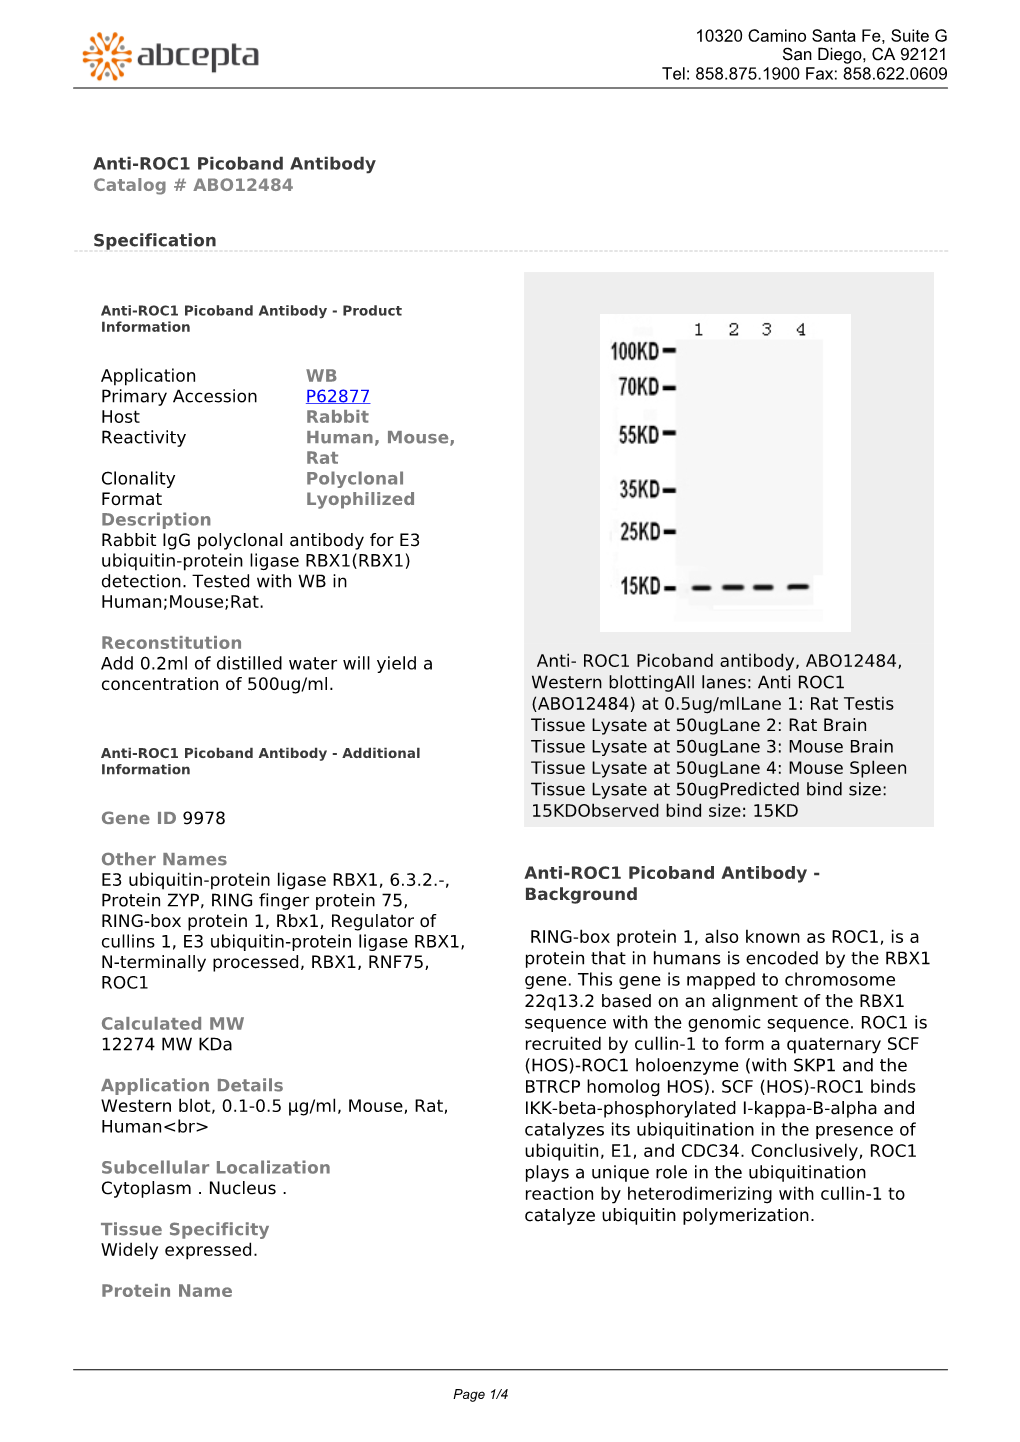 Anti-ROC1 Picoband Antibody Catalog # ABO12484